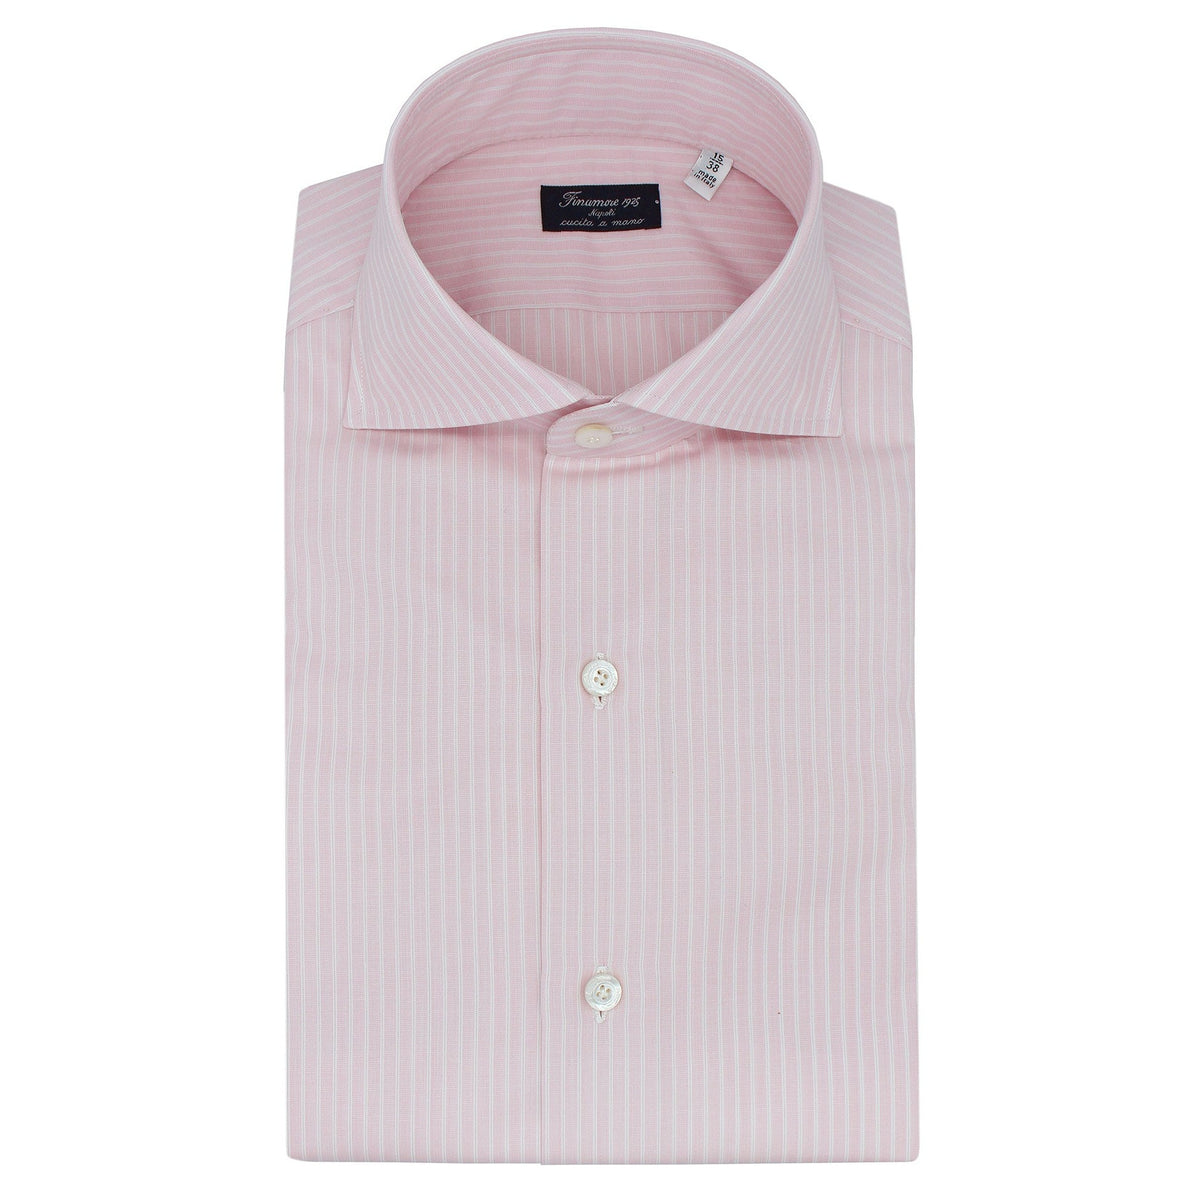 Classic fit Naples shirt pink bottom white stripe